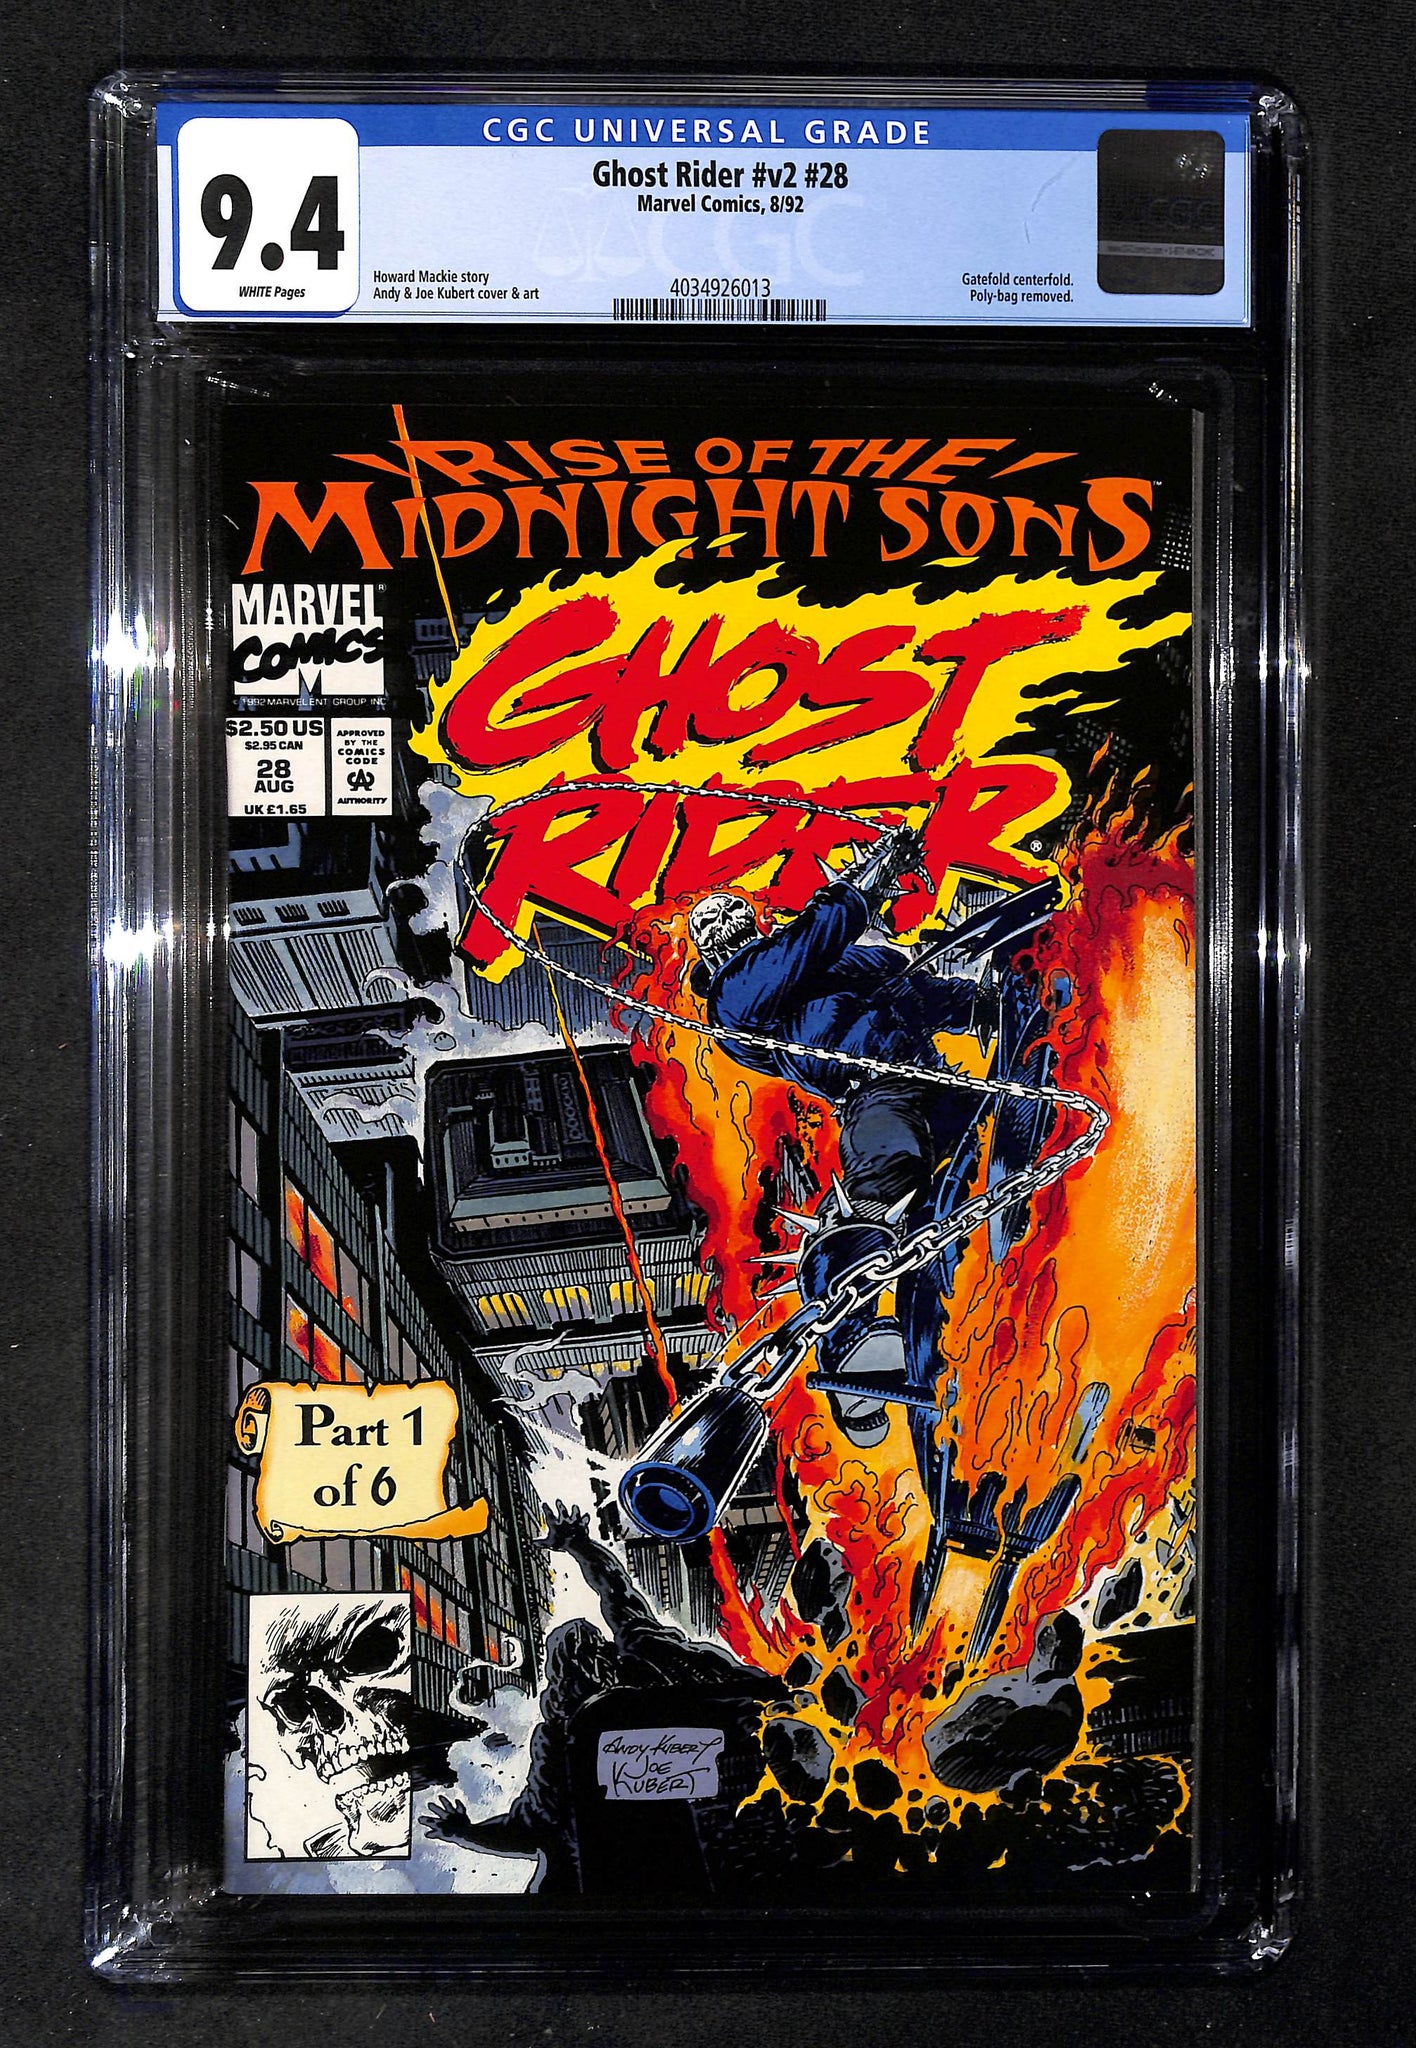 Ghost Rider #v2 #28 CGC 9.4